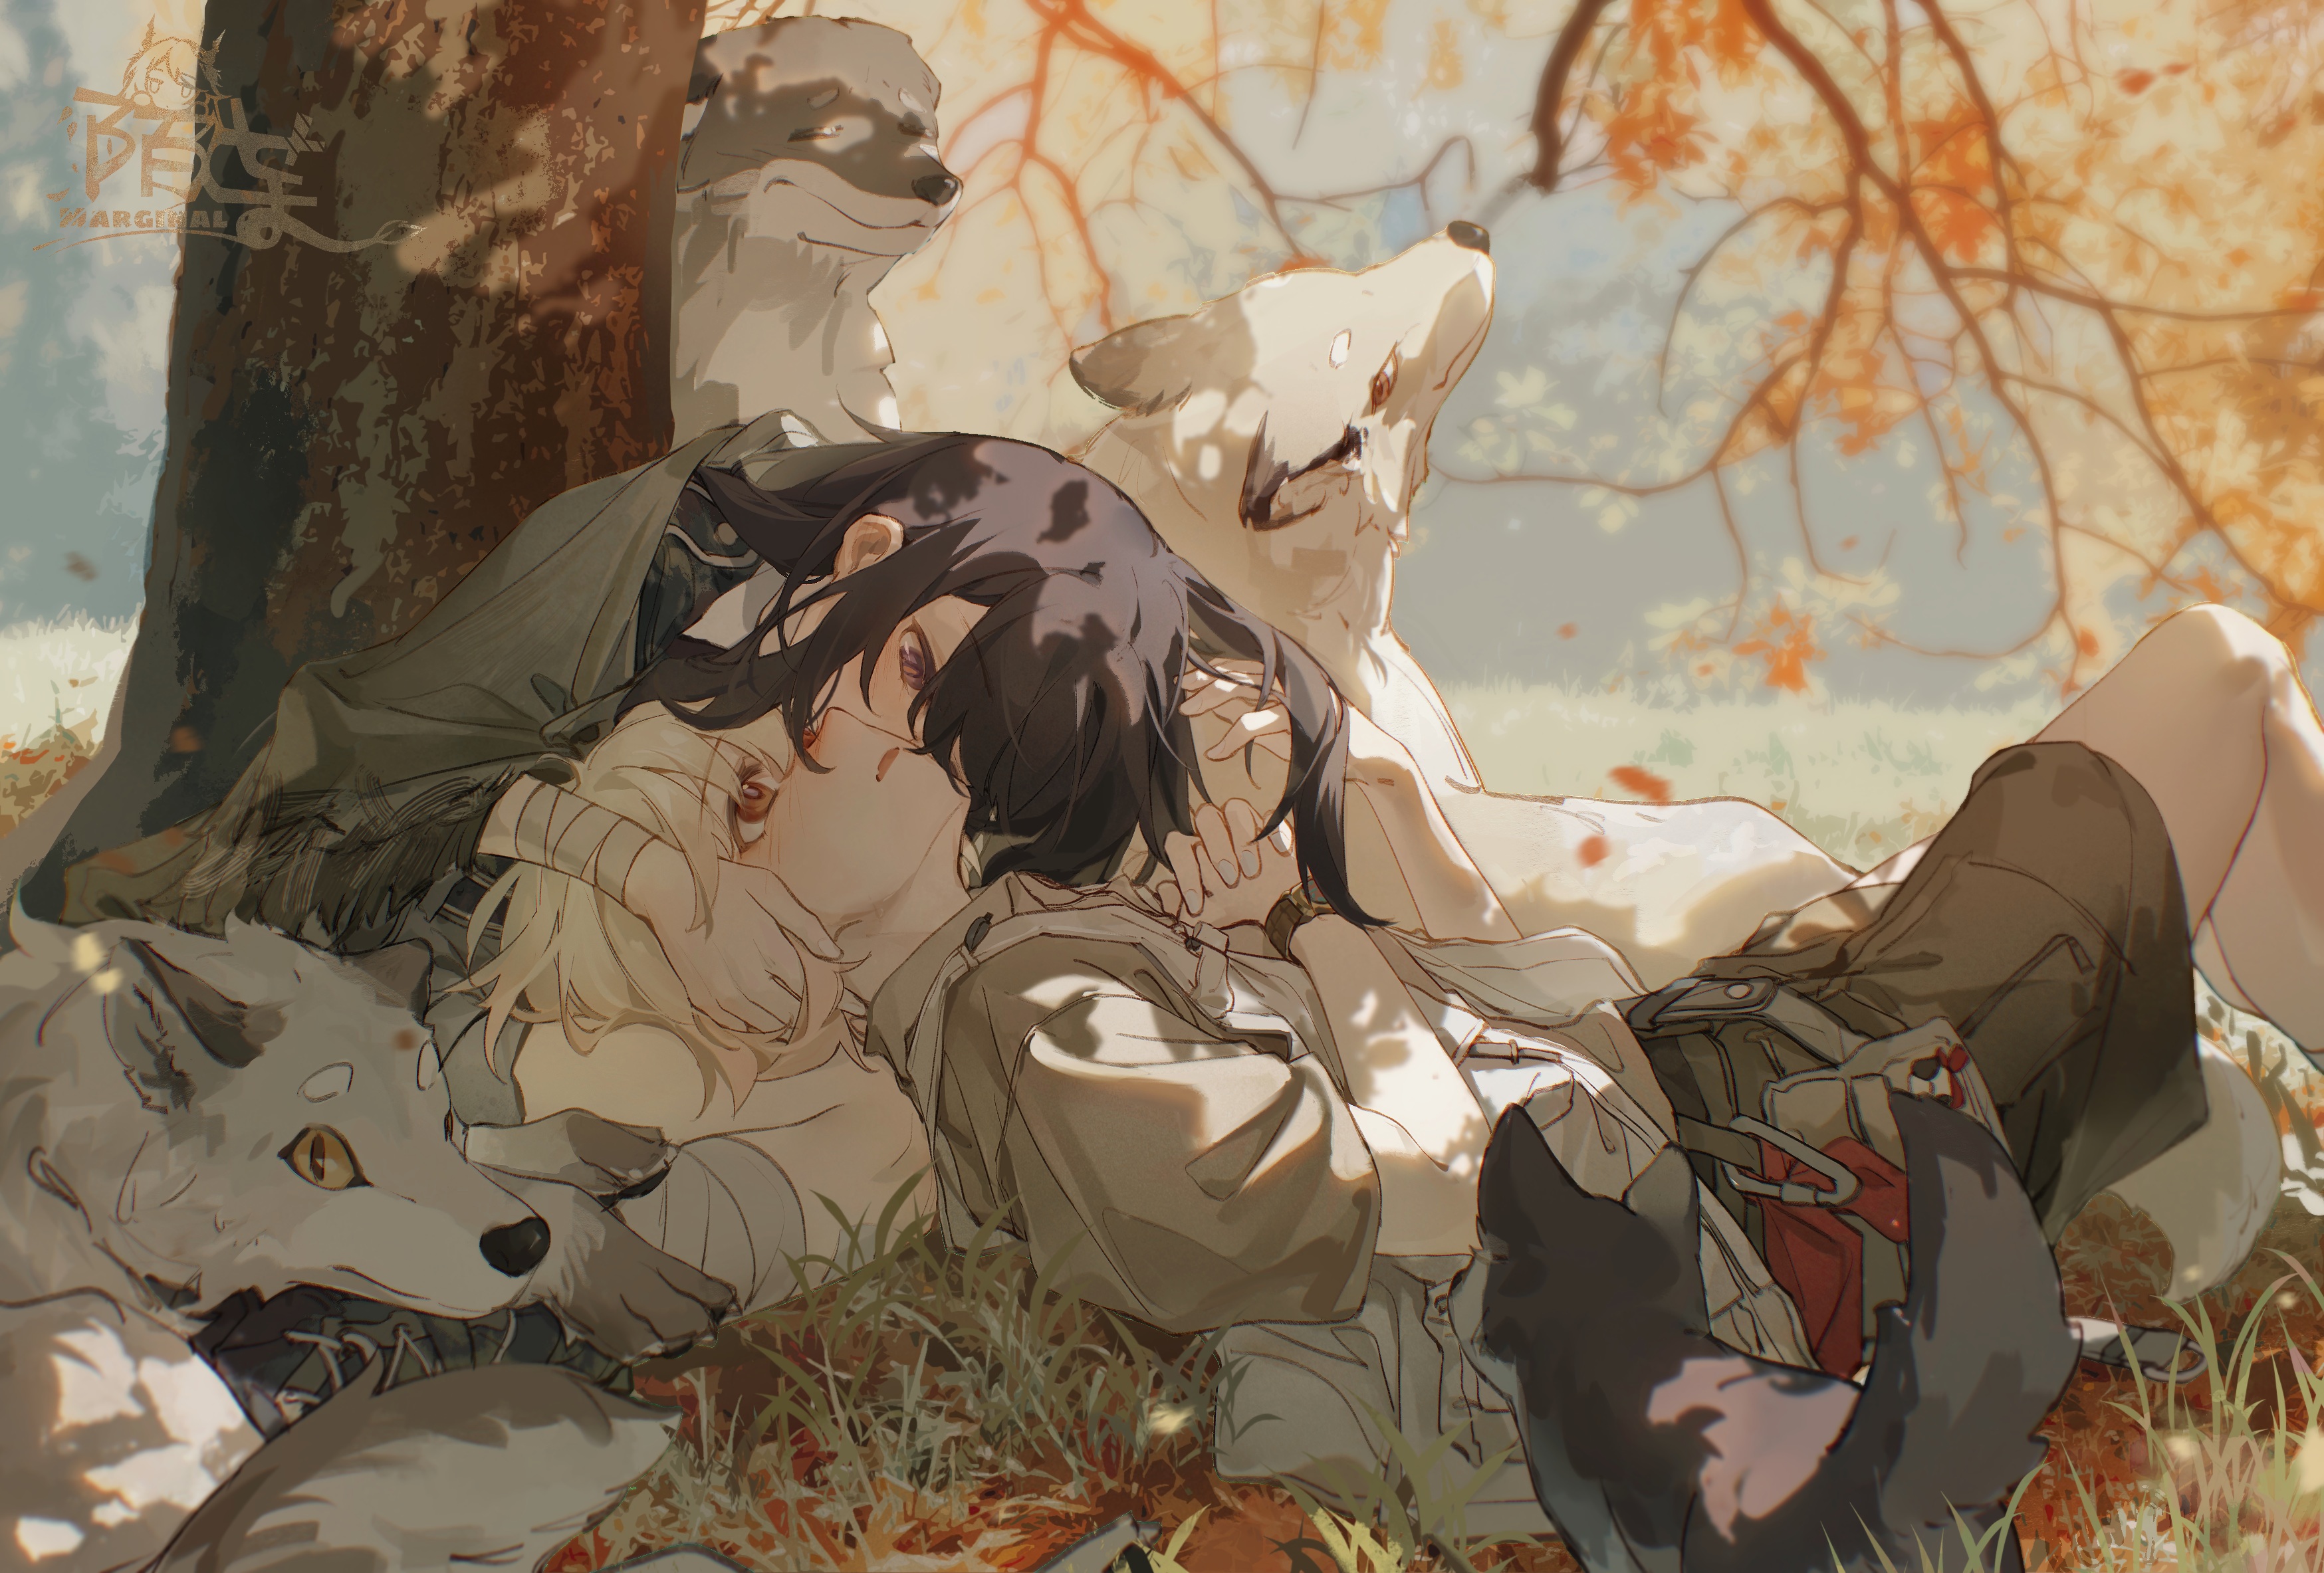 Anime 3496x2367 anime anime girls blushing animals trees logo branch leaves sunlight lying down lying on back long hair bandages wolf